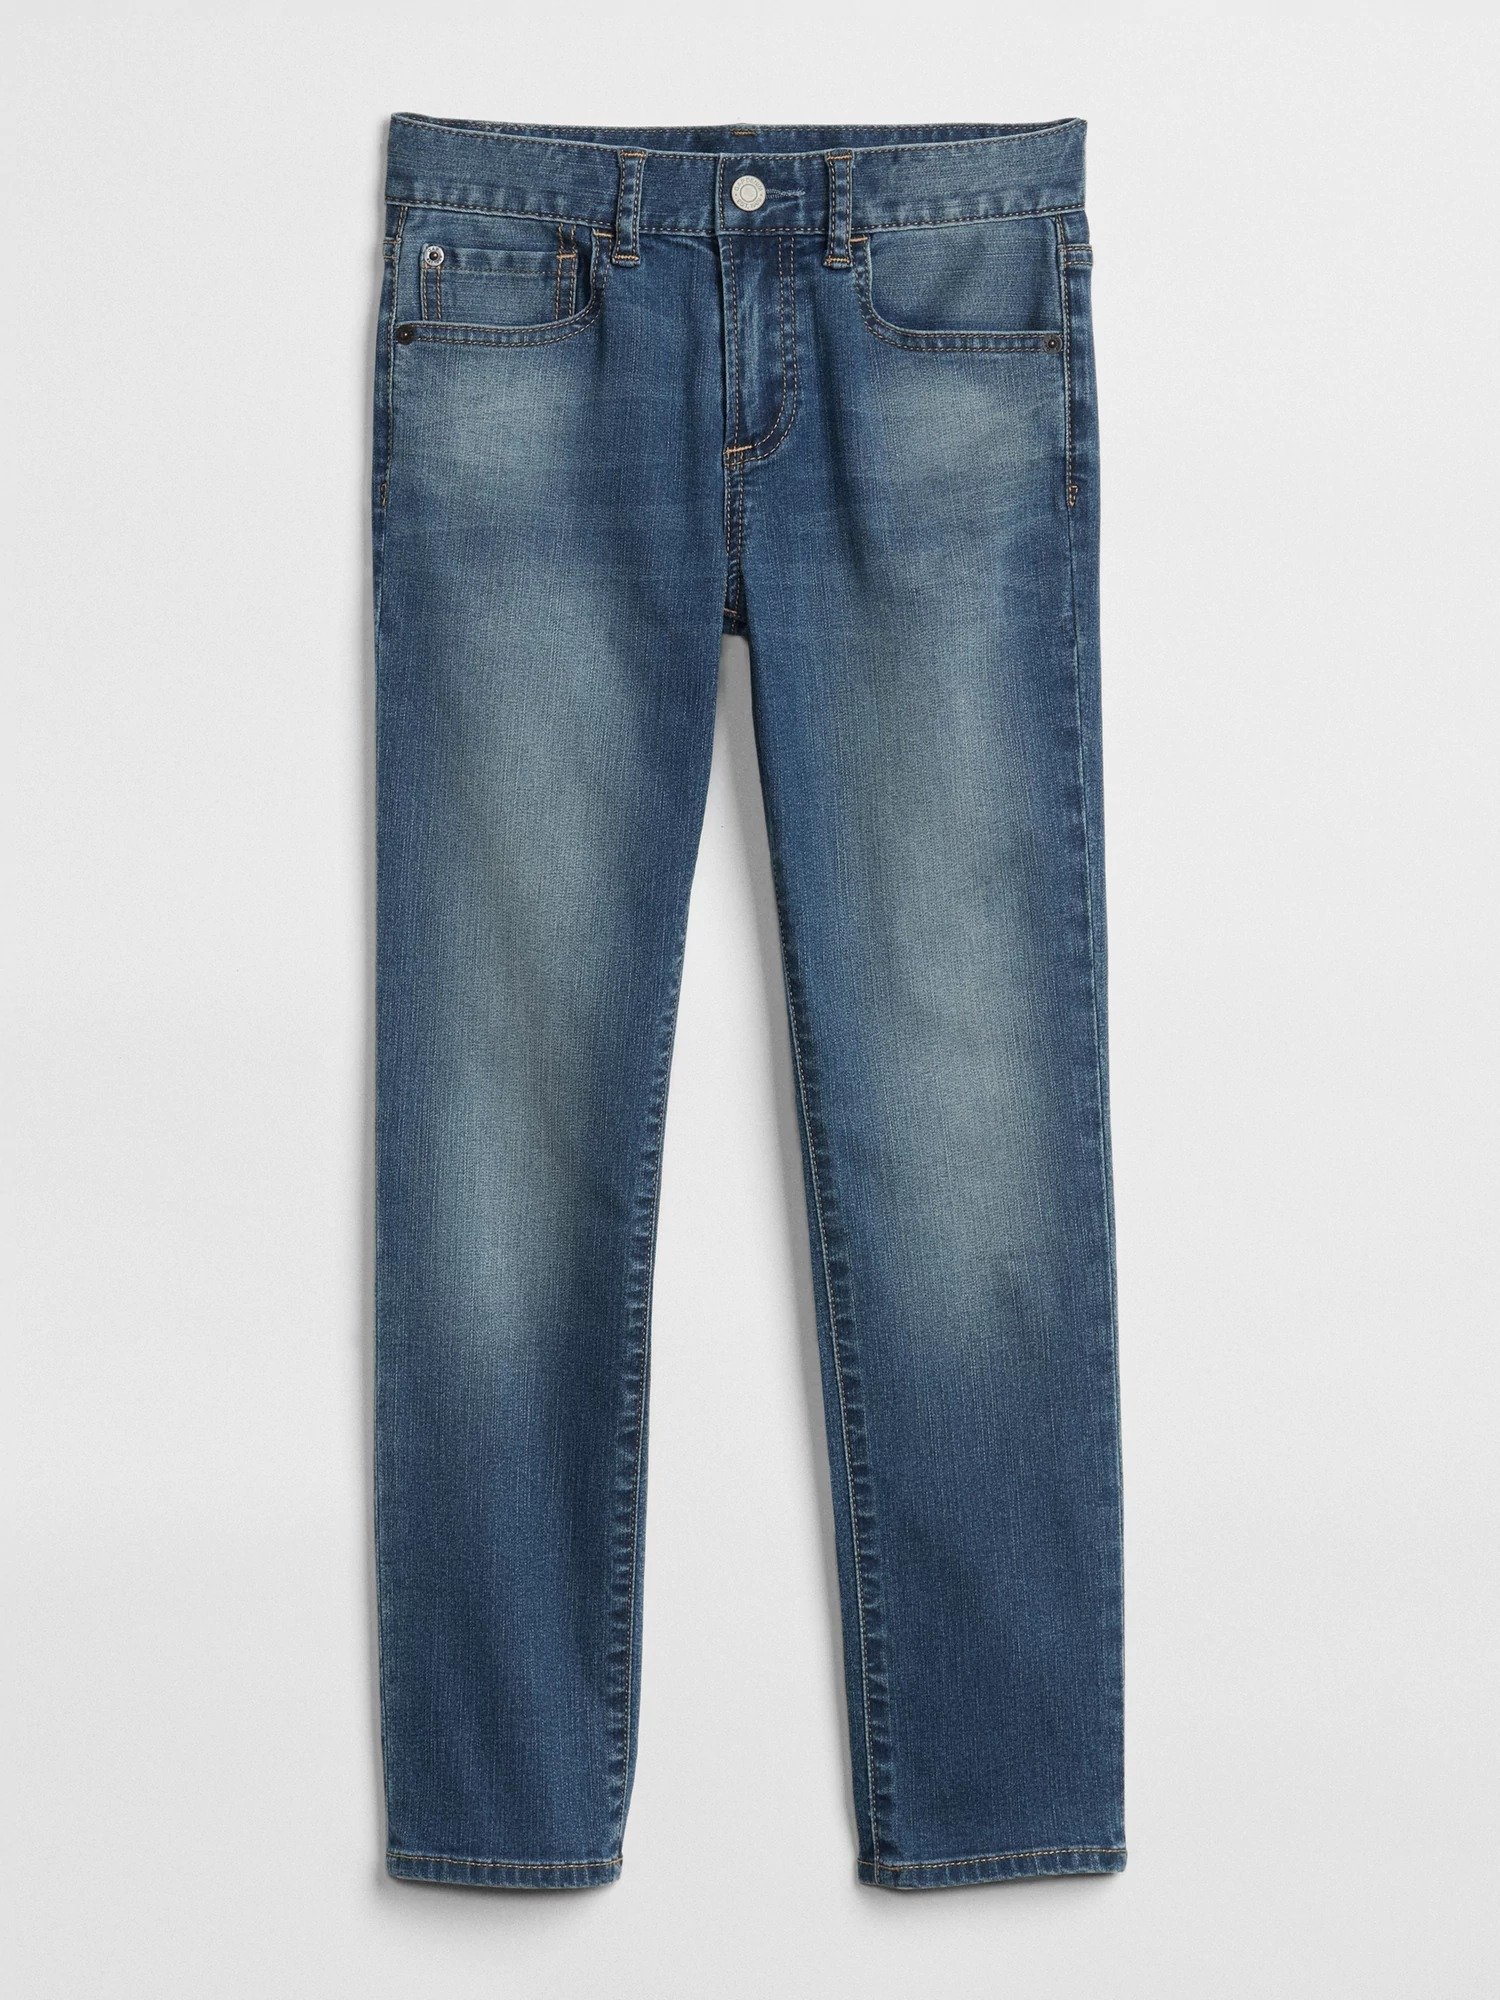 Wearlight slim jean pantolon product image